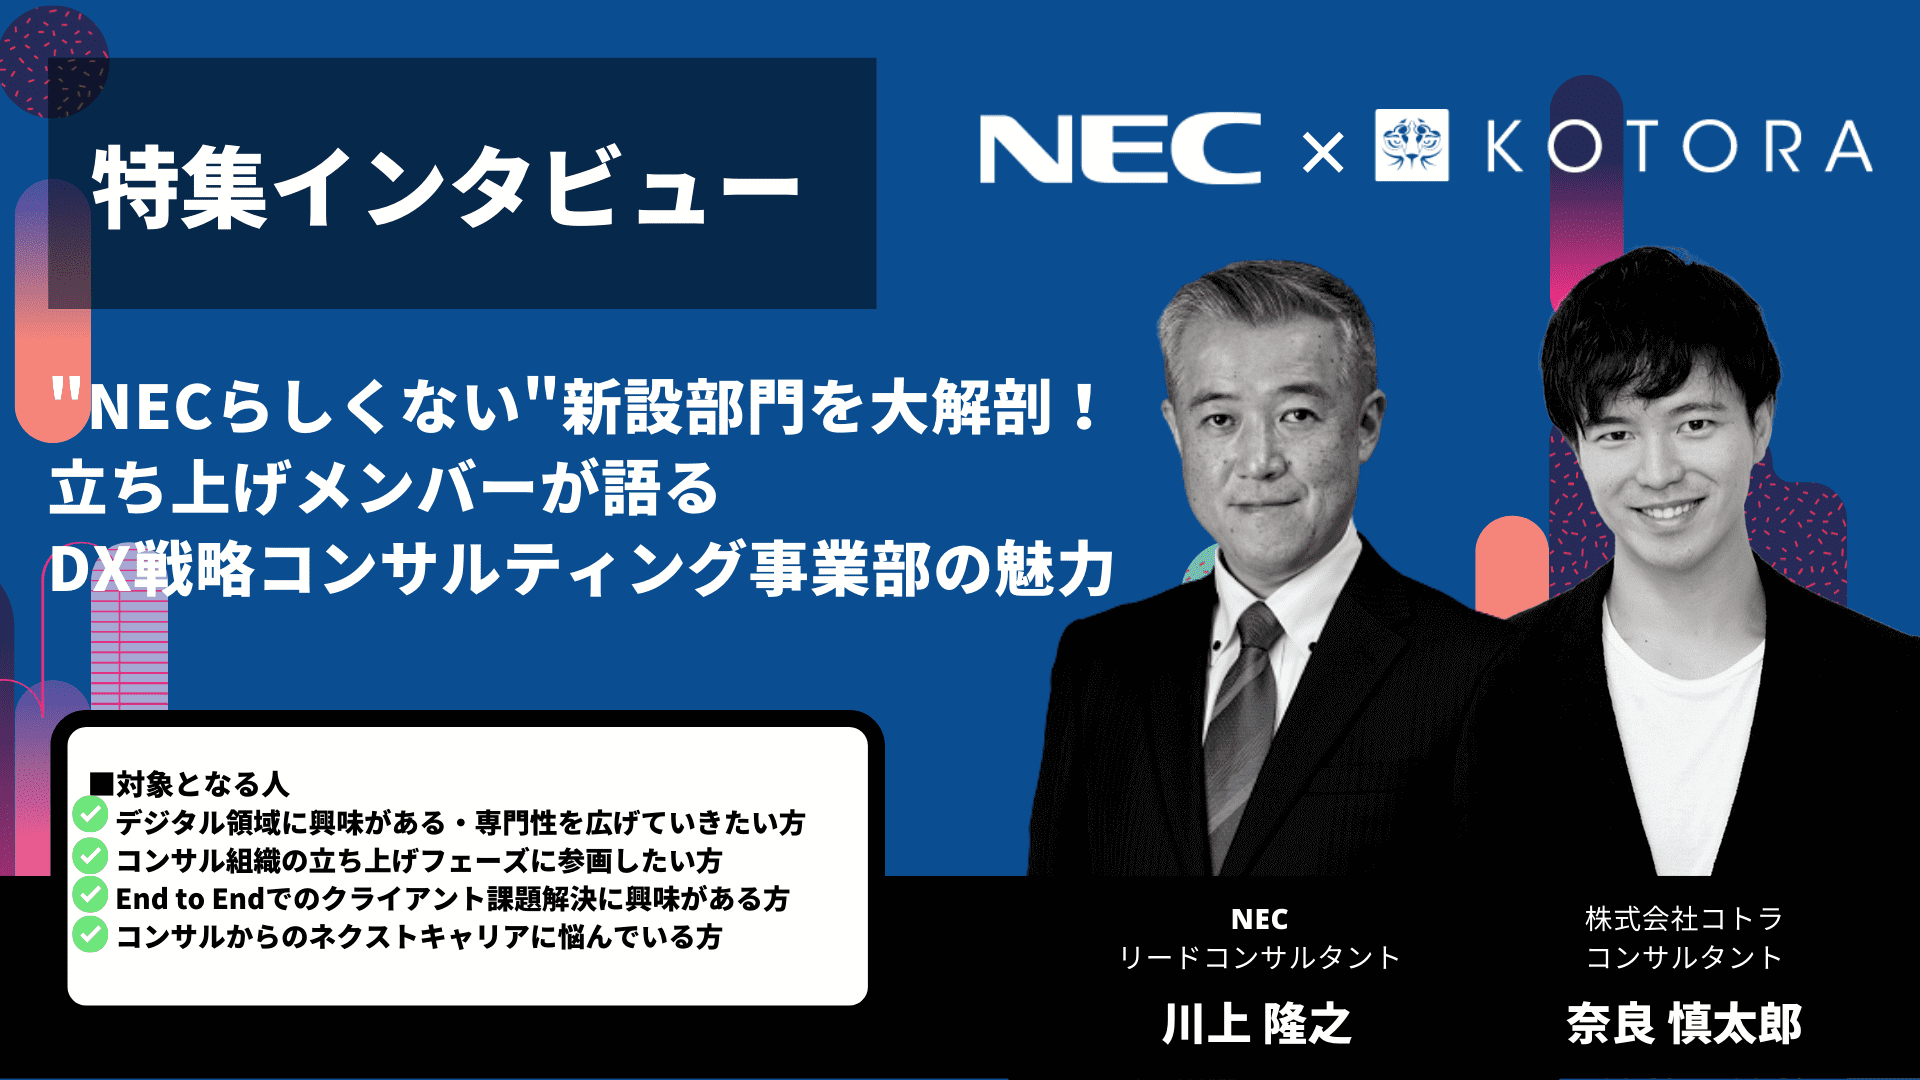 Copy of ウェビナーサムネイルひな型 8 1 - 日本電気株式会社（NEC）の転職・採用情報